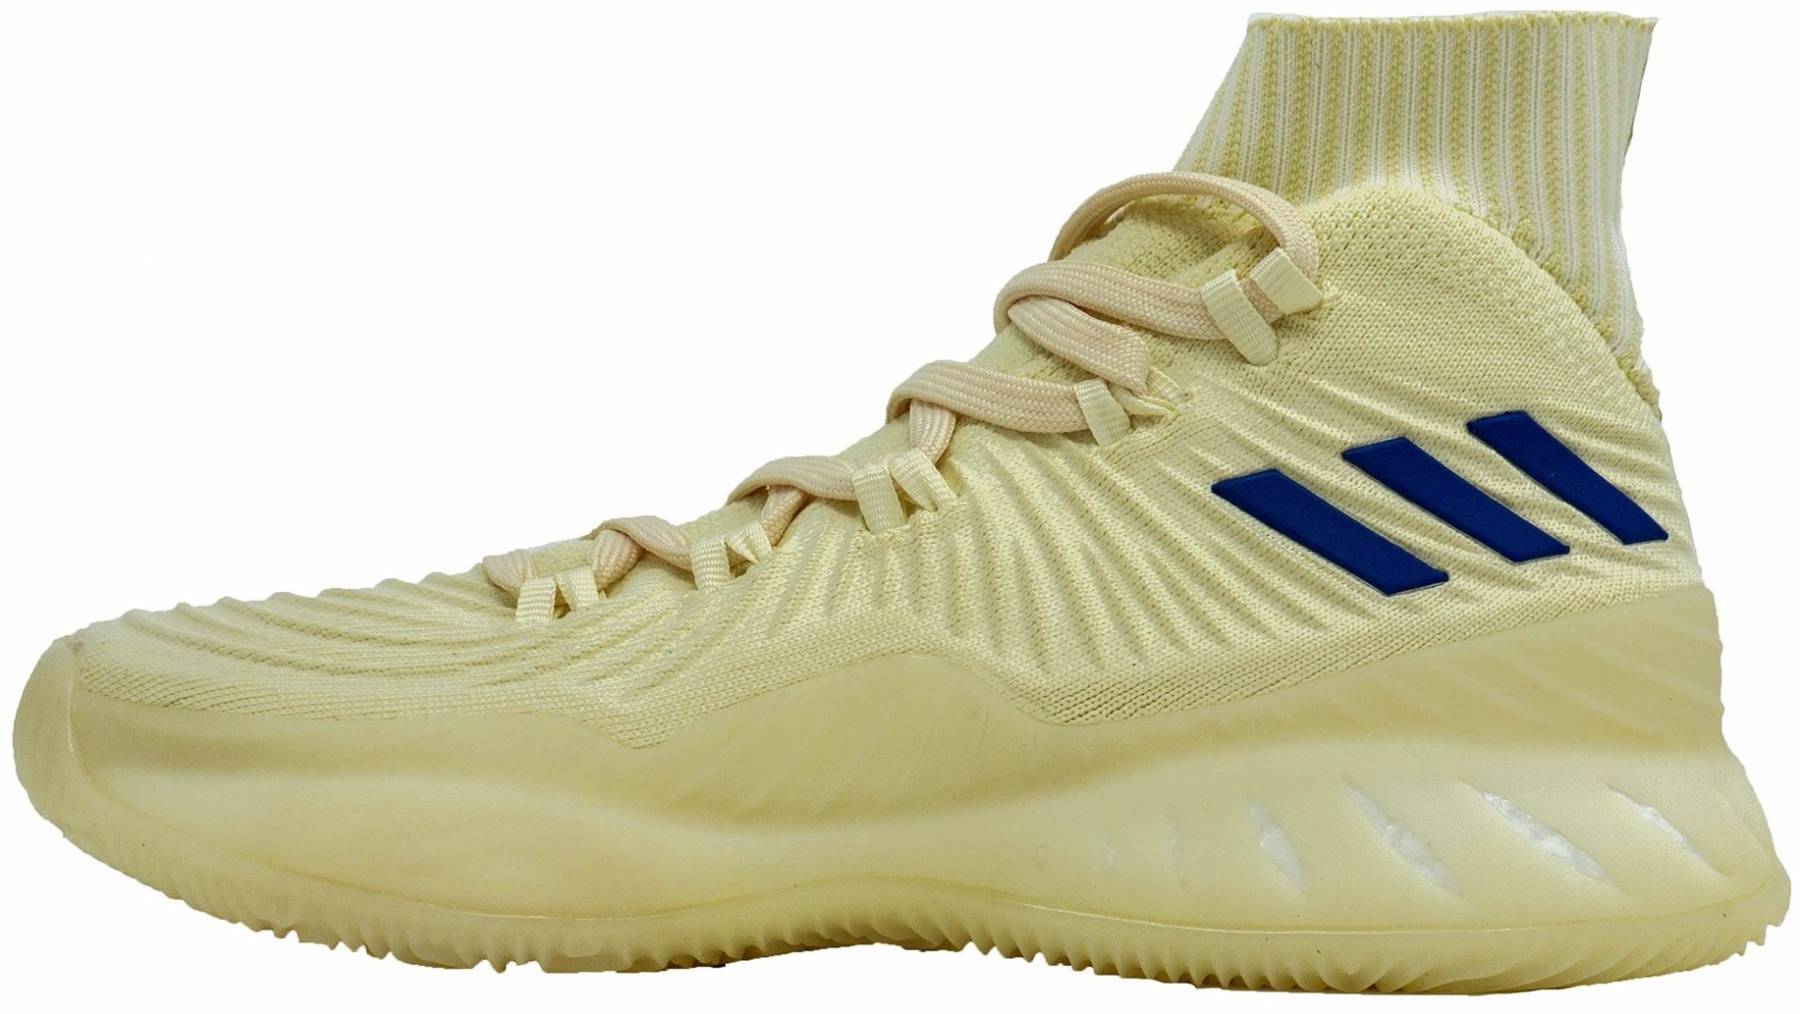 adidas top 10 basketball shoes